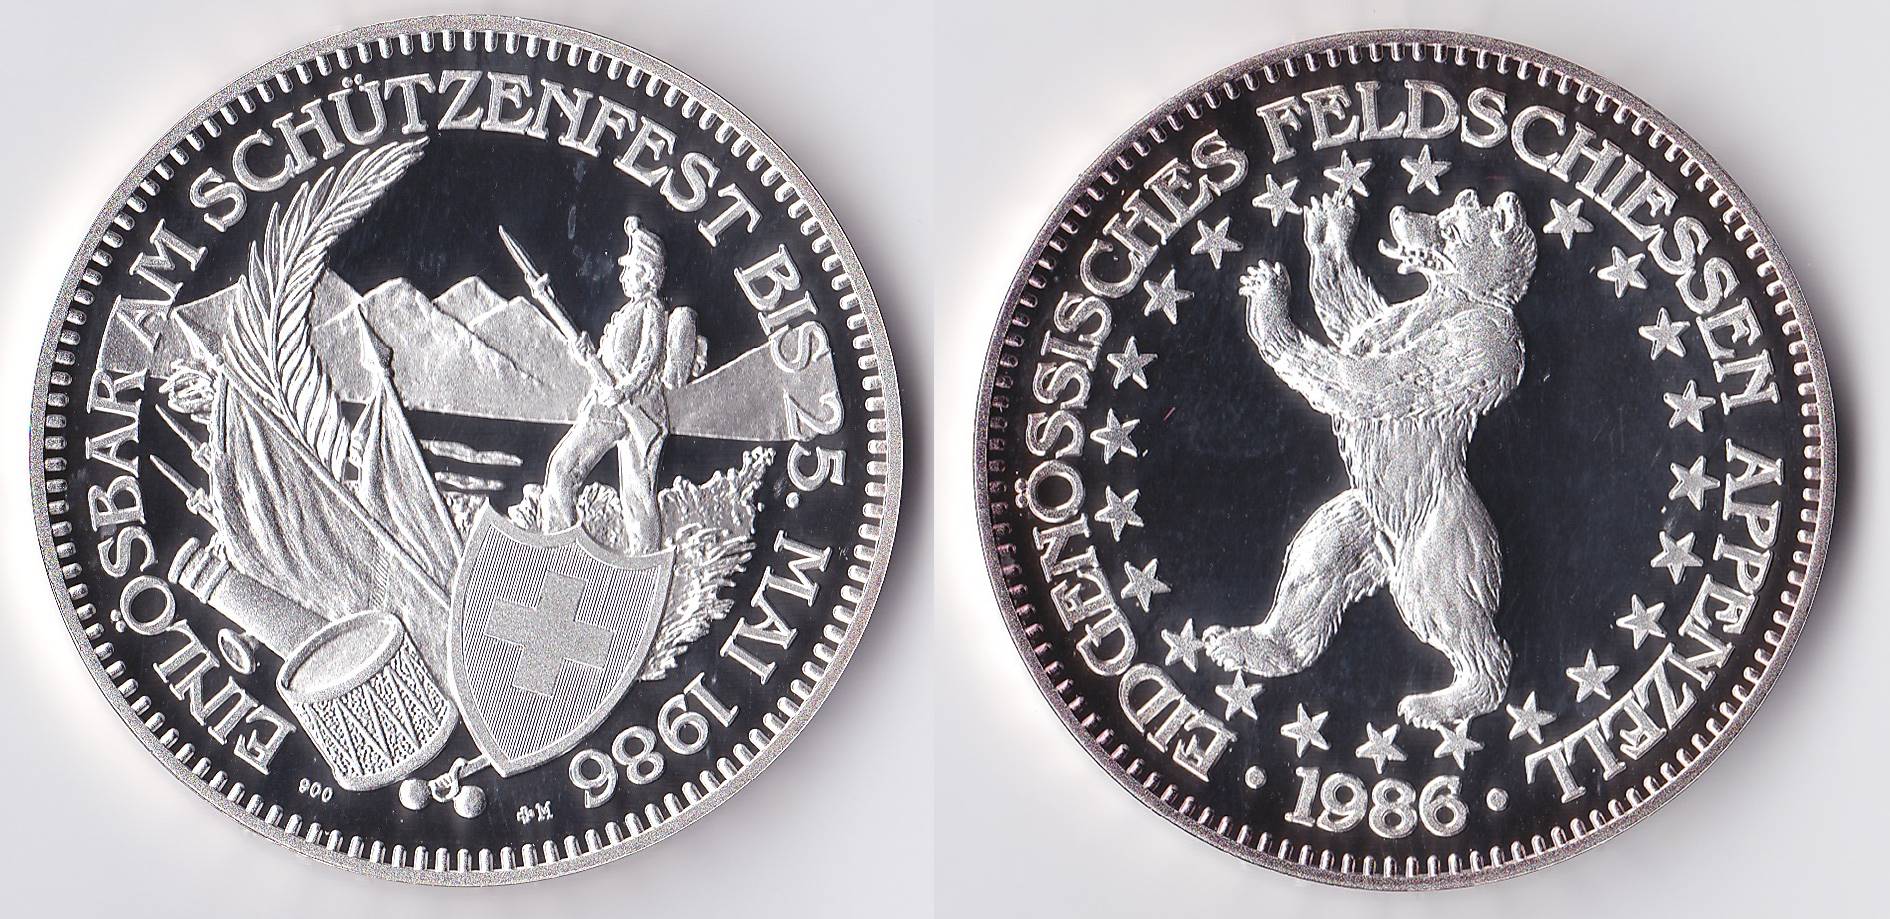 1986 switzerland 50 francs.jpg